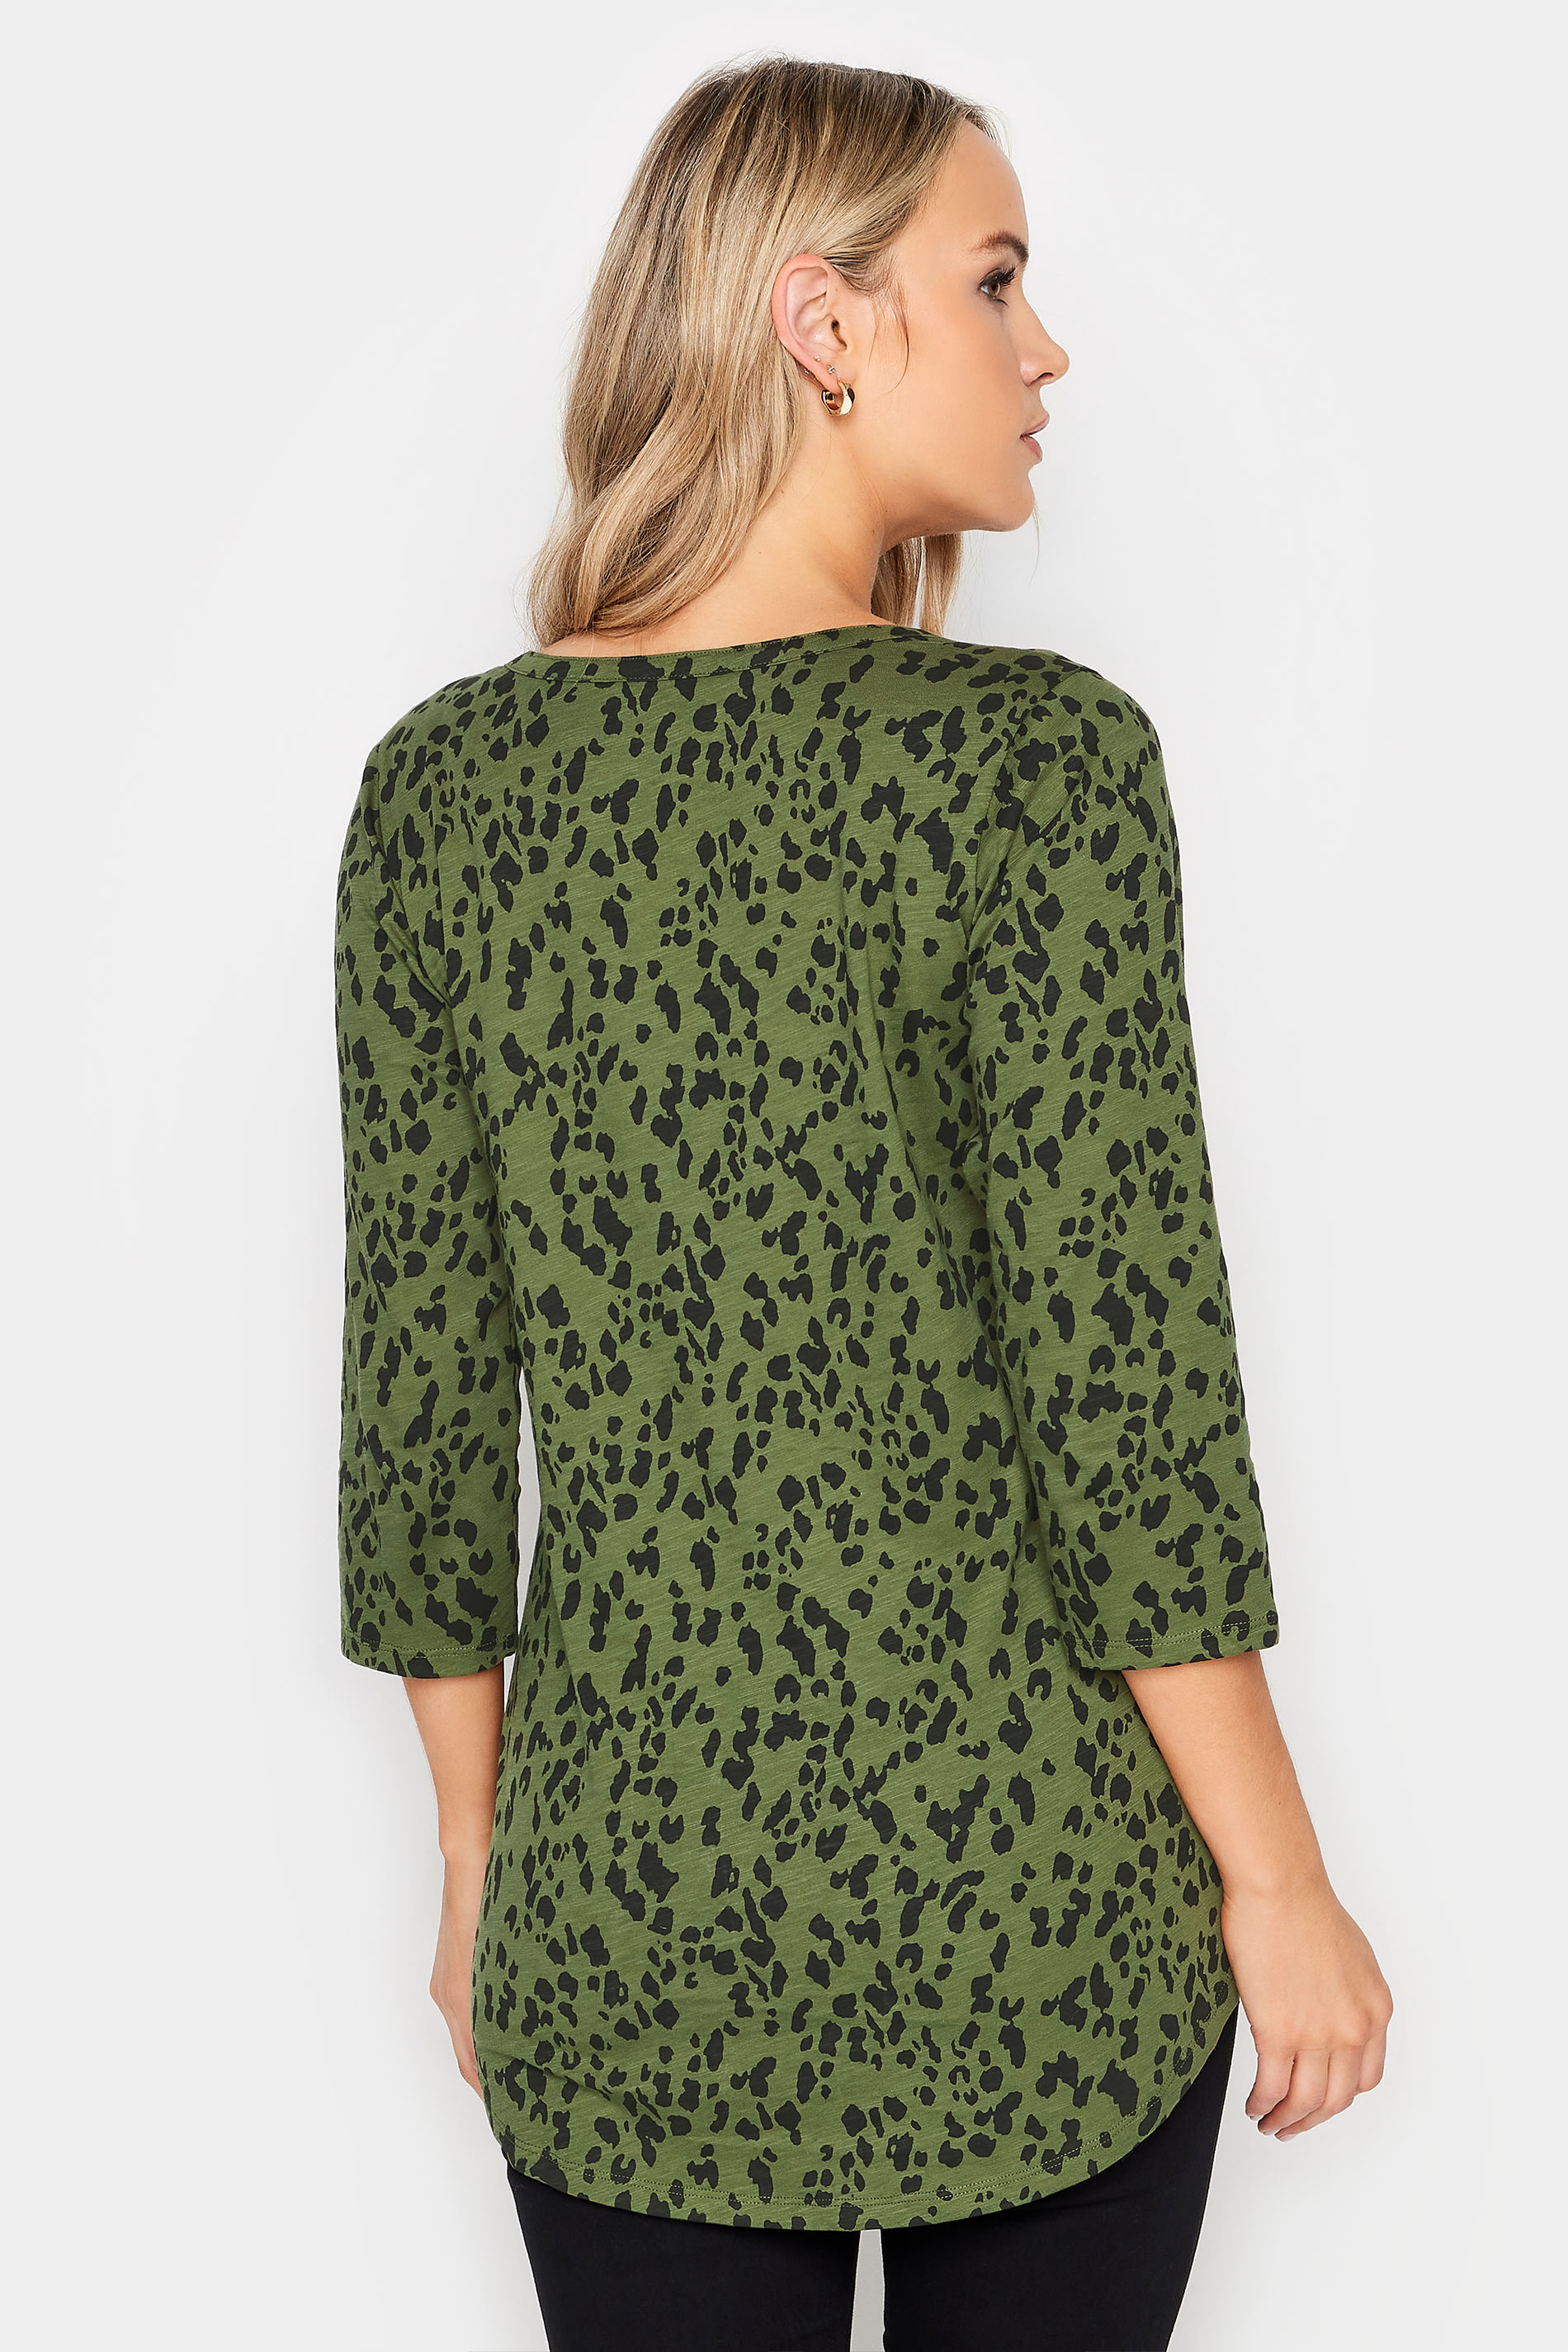 LTS Tall Womens Khaki Green Animal Print Henley Top | Long Tall Sally  3